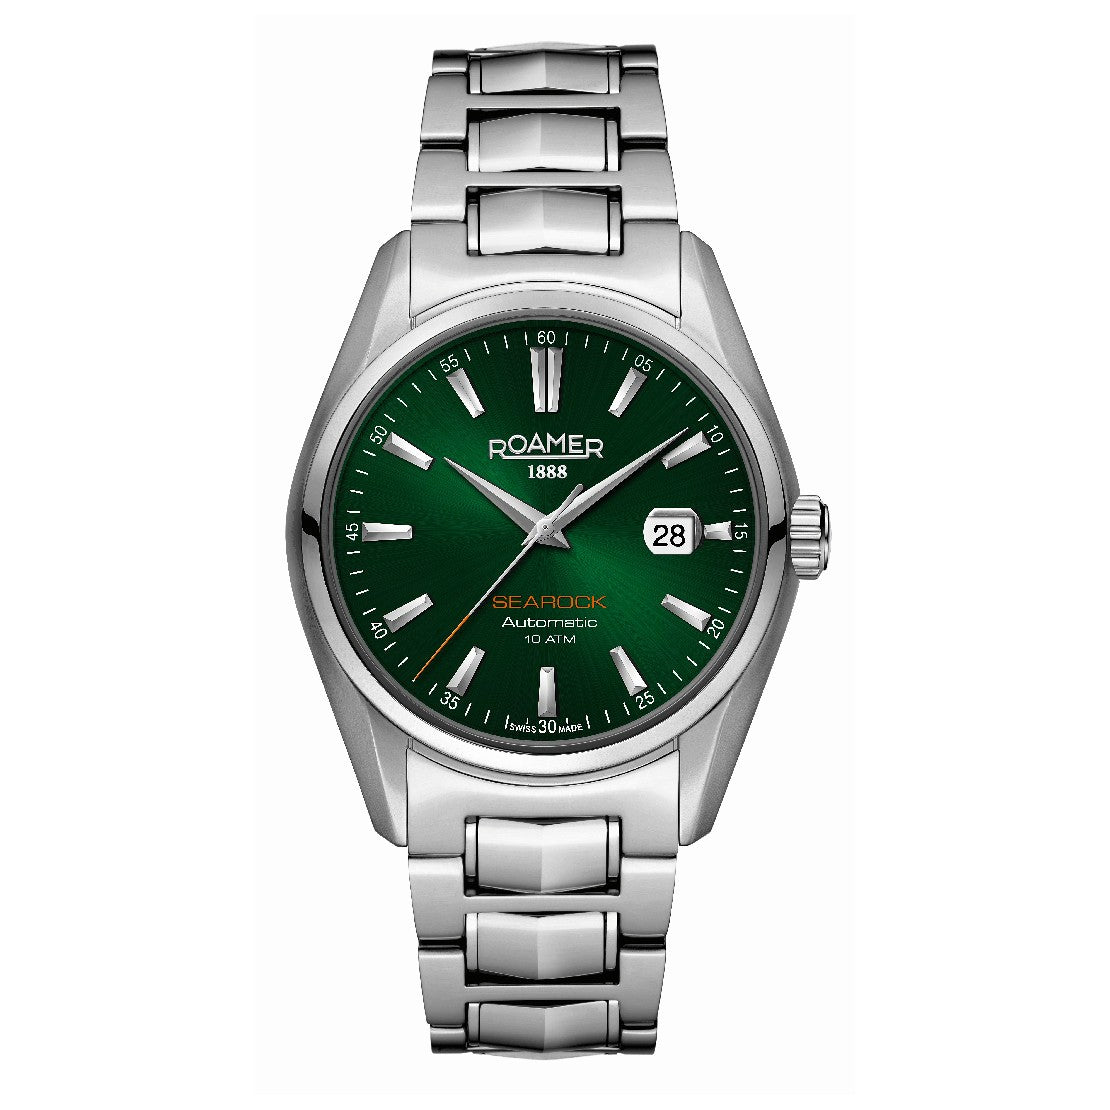 Romer Men's Watch Automatic Movement Green Dial - ROA-0091